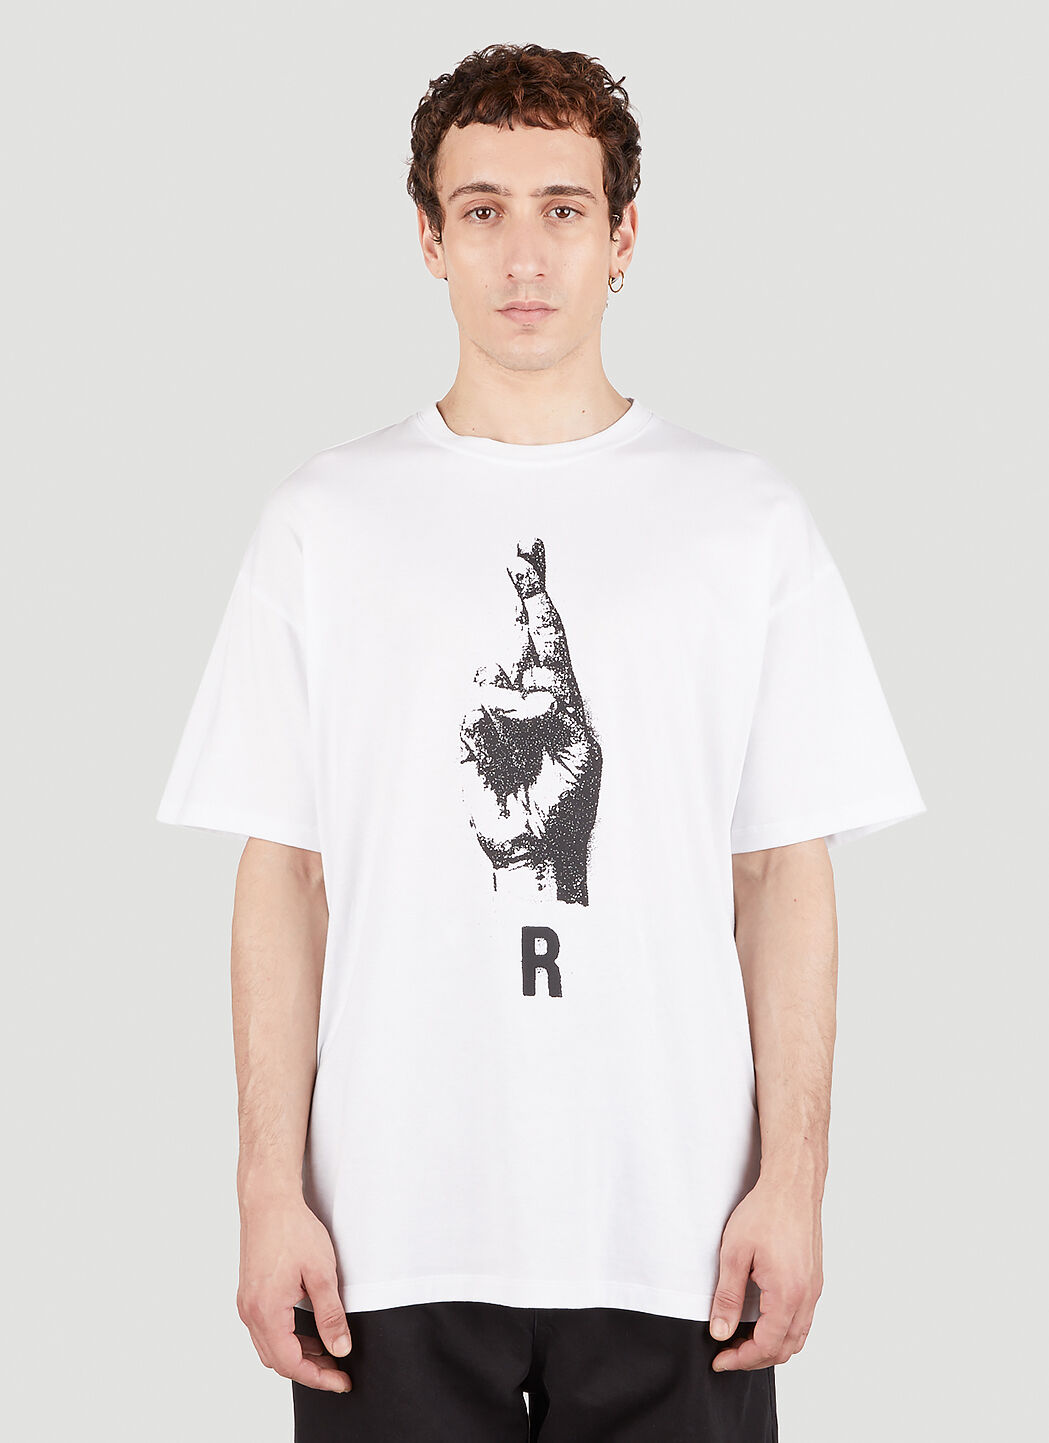 Raf Simons x Fred Perry 그래픽 프린트 티셔츠 블랙 rsf0152002